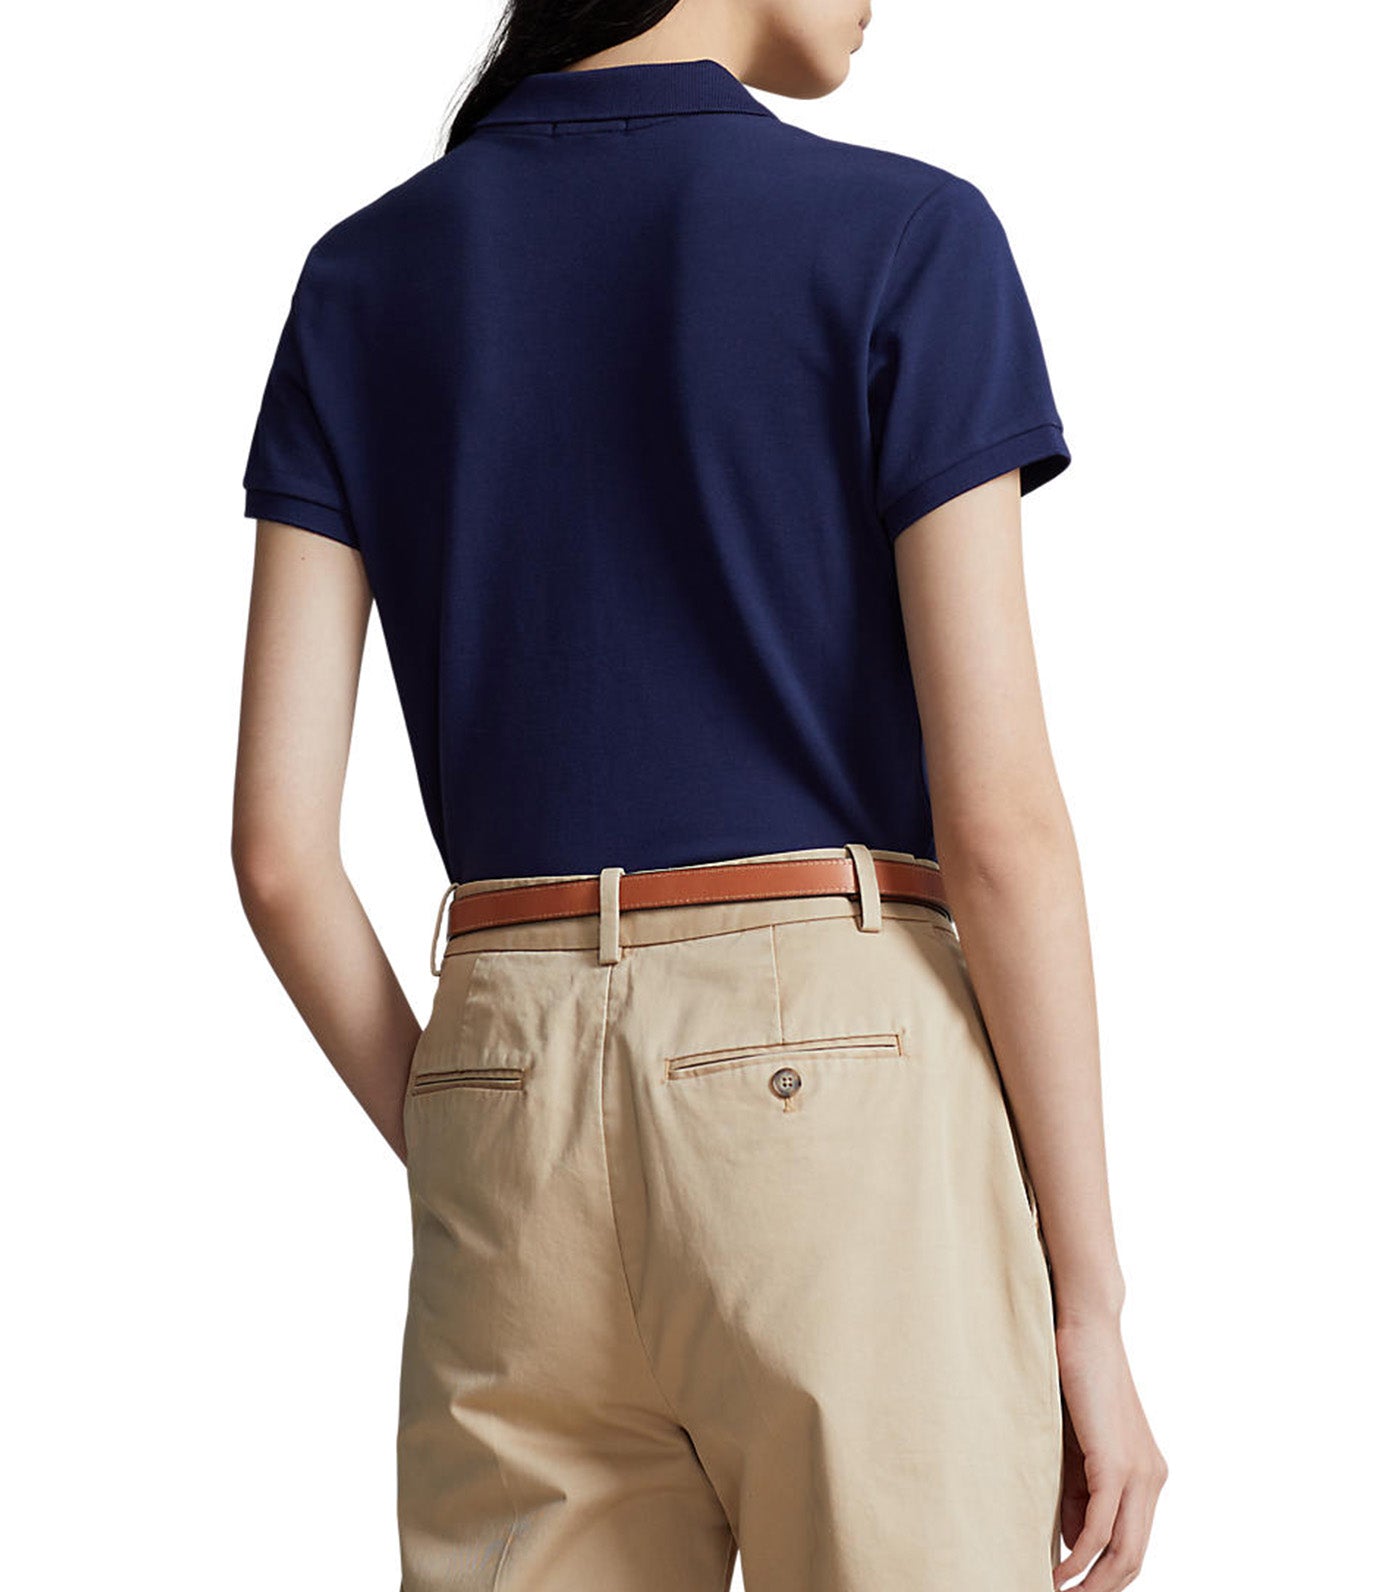 Women's Slim Fit Stretch Polo Shirt Newport Navy